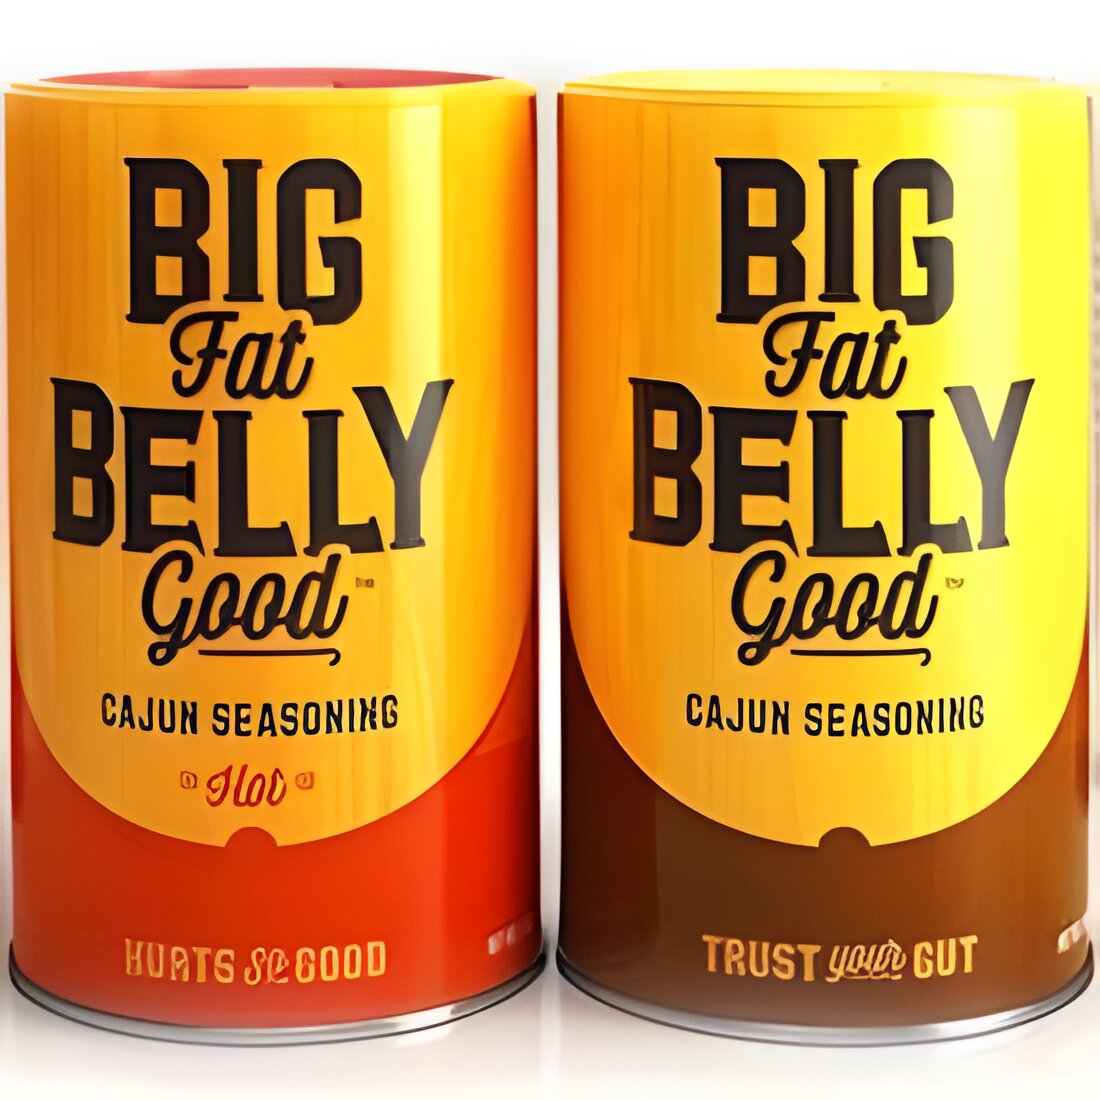 Free Big Fat Belly Good Seasoning Samples